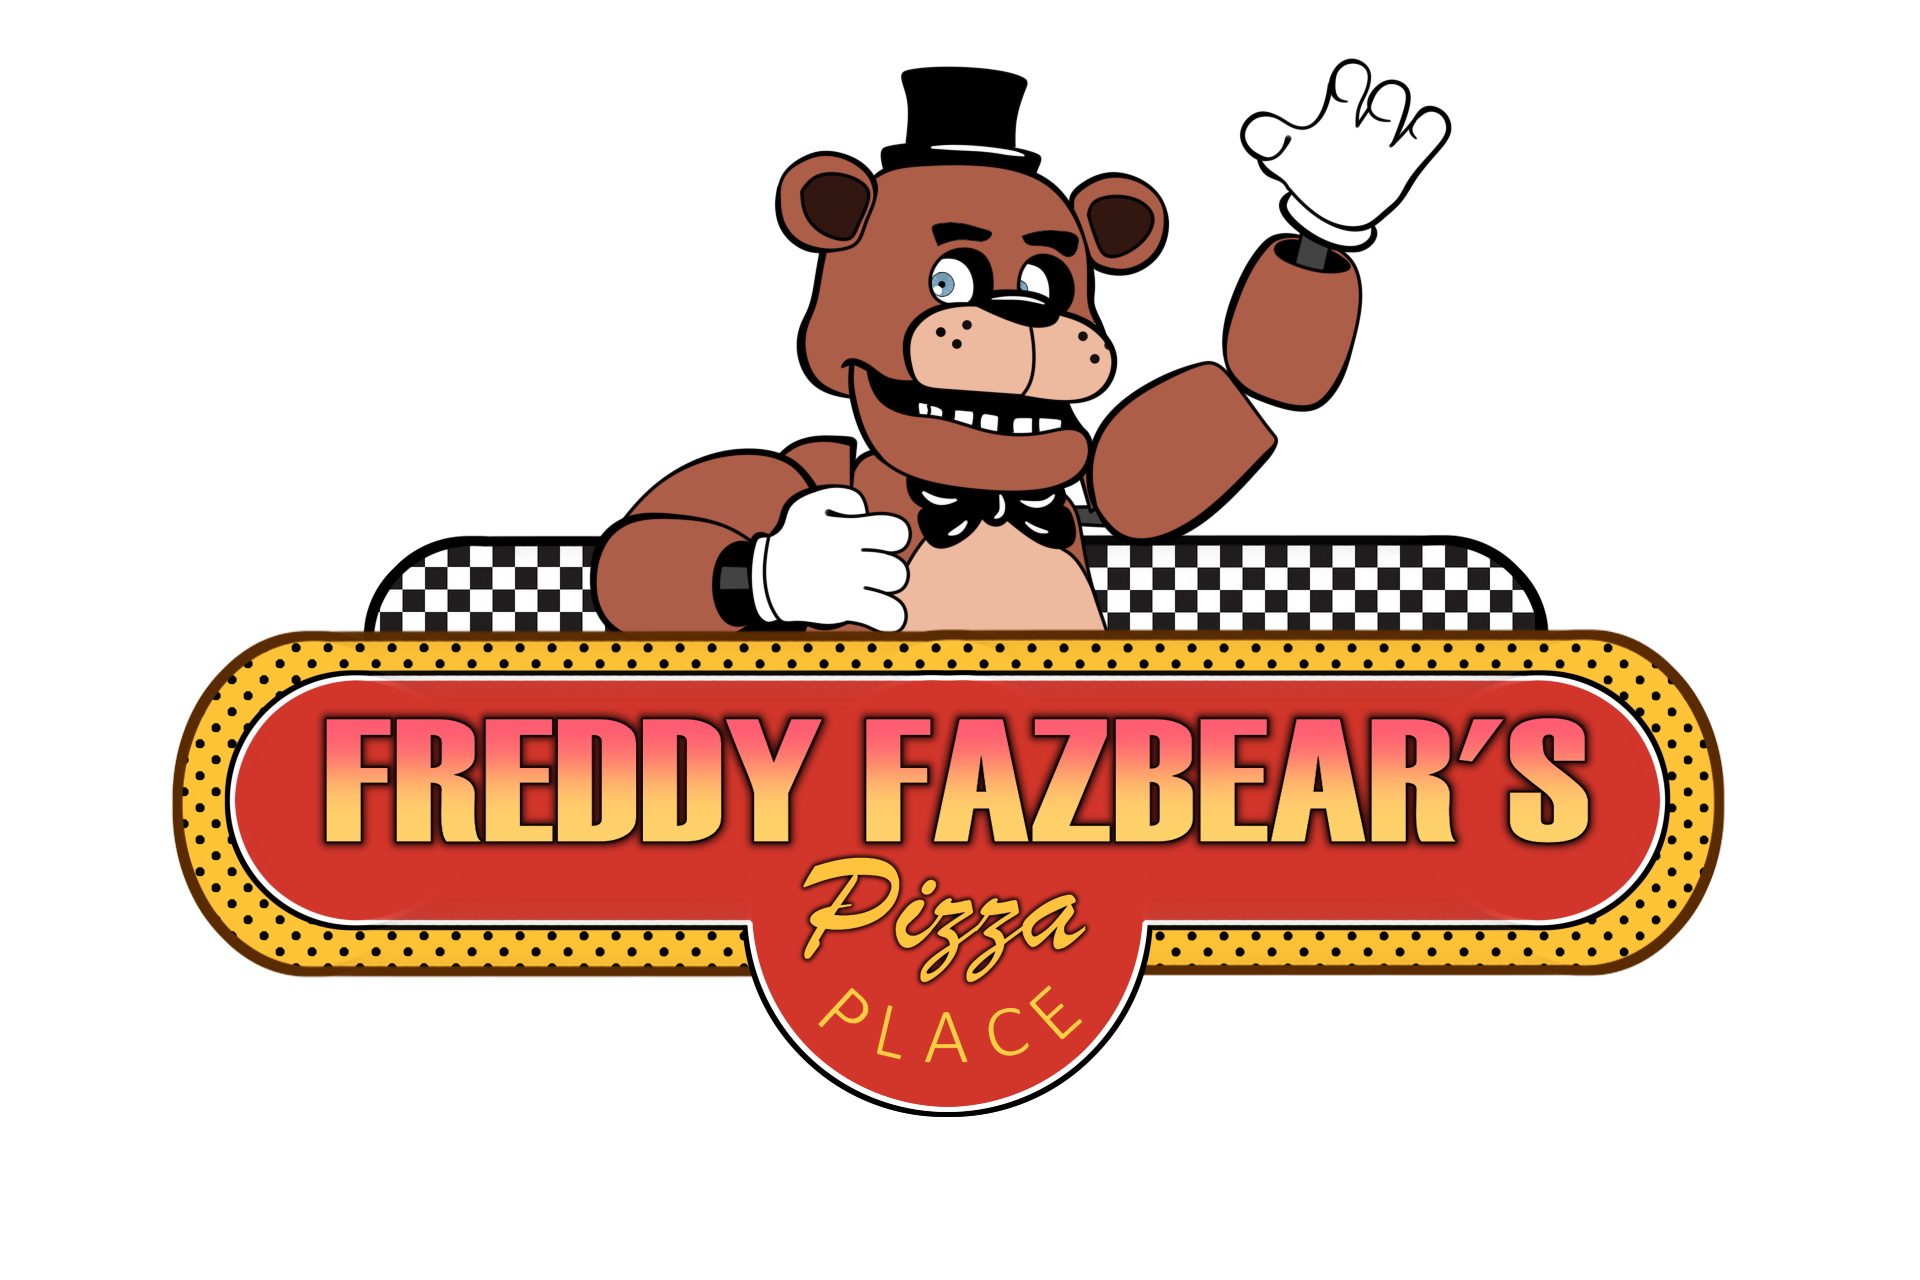 Buy Five Nights at Freddy's Freddy Fazbear's Pizza Place